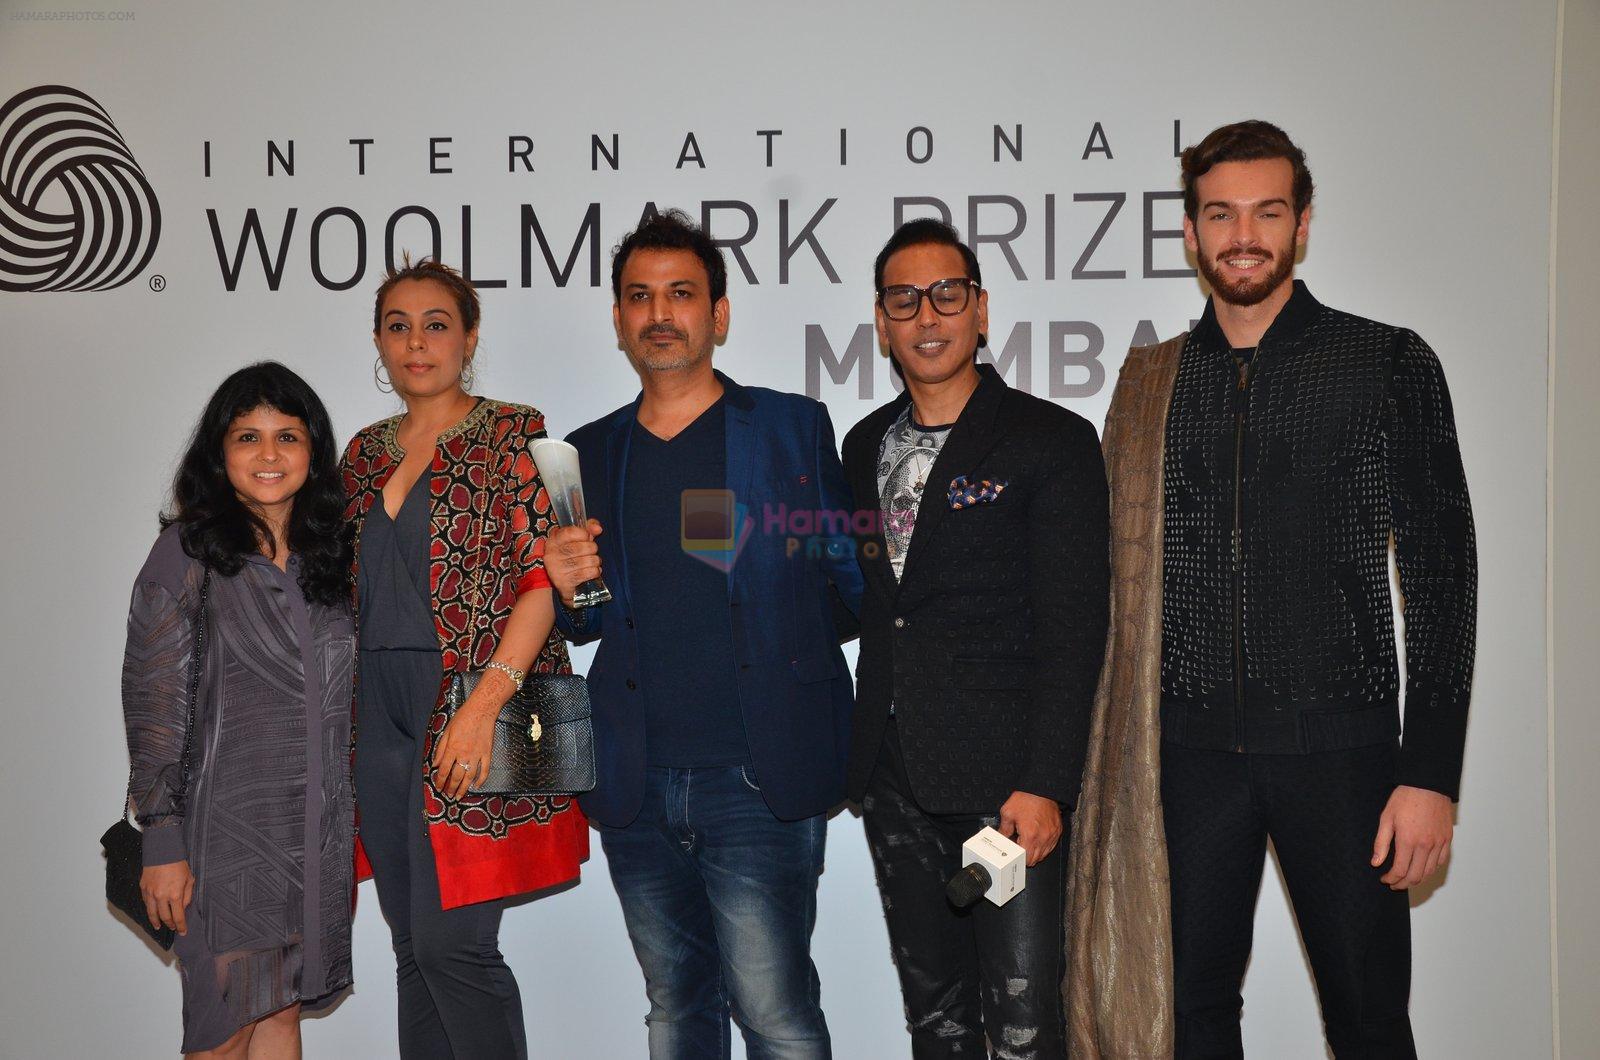 at International Woolmark prize mumbai on 15th July 2016